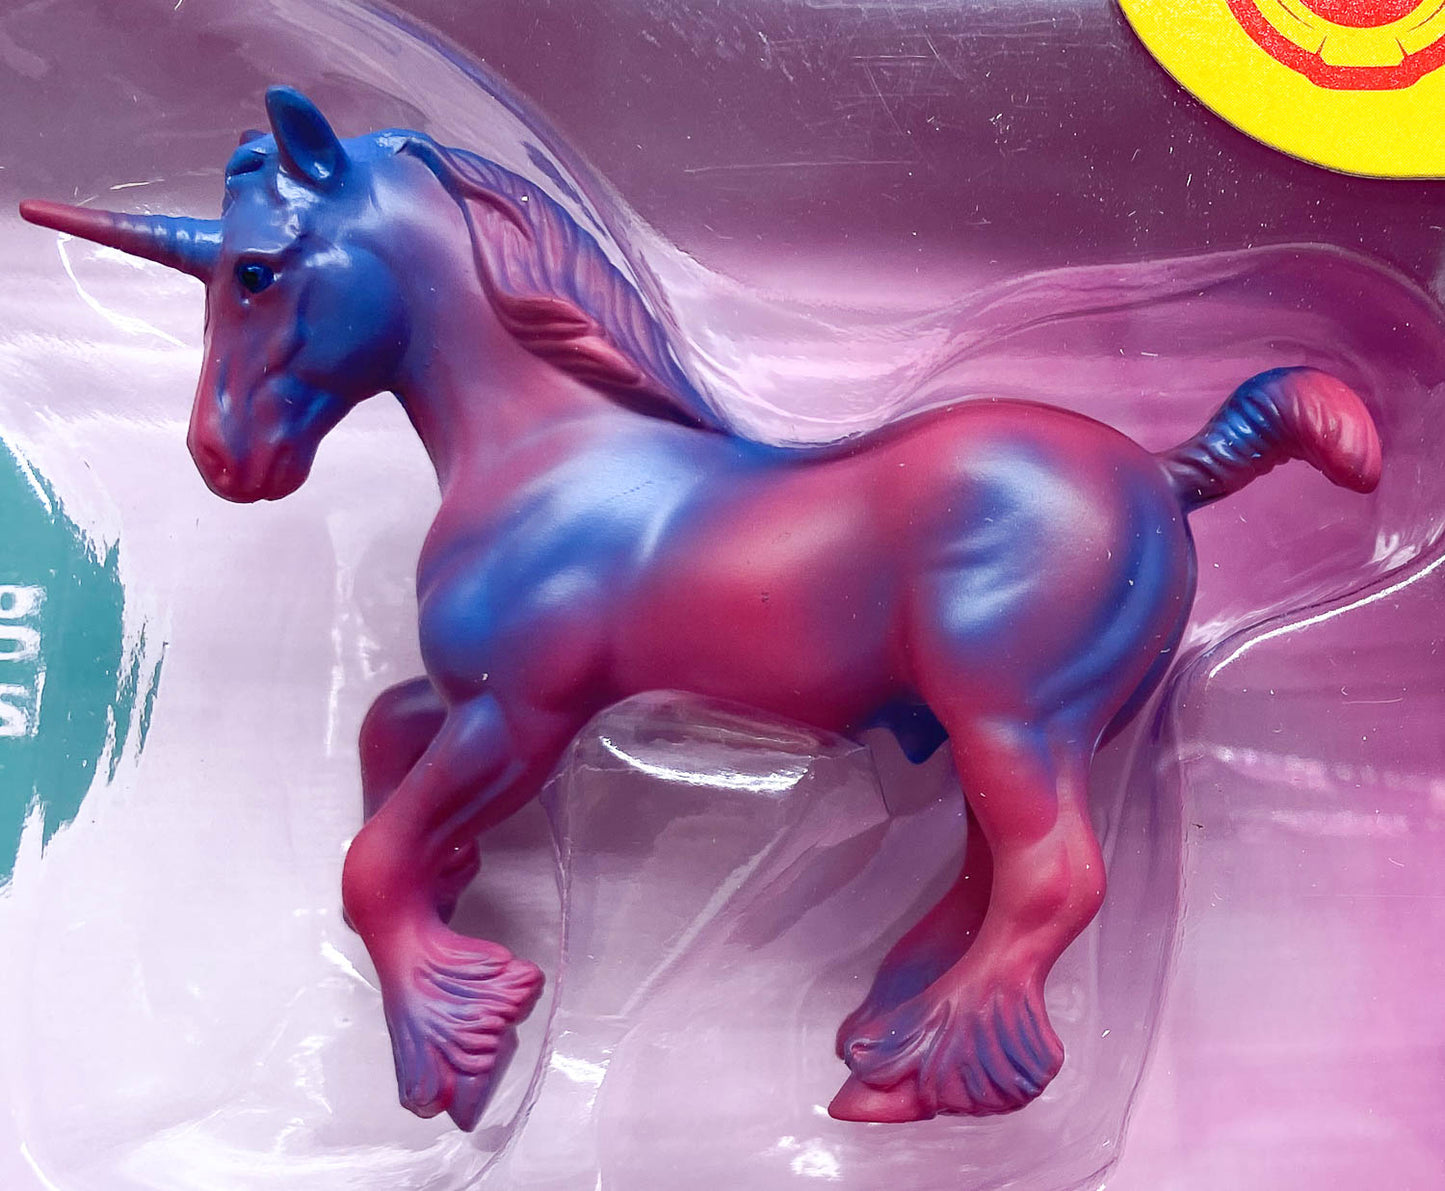 Stablemates Unicorn Swirl Gift Set